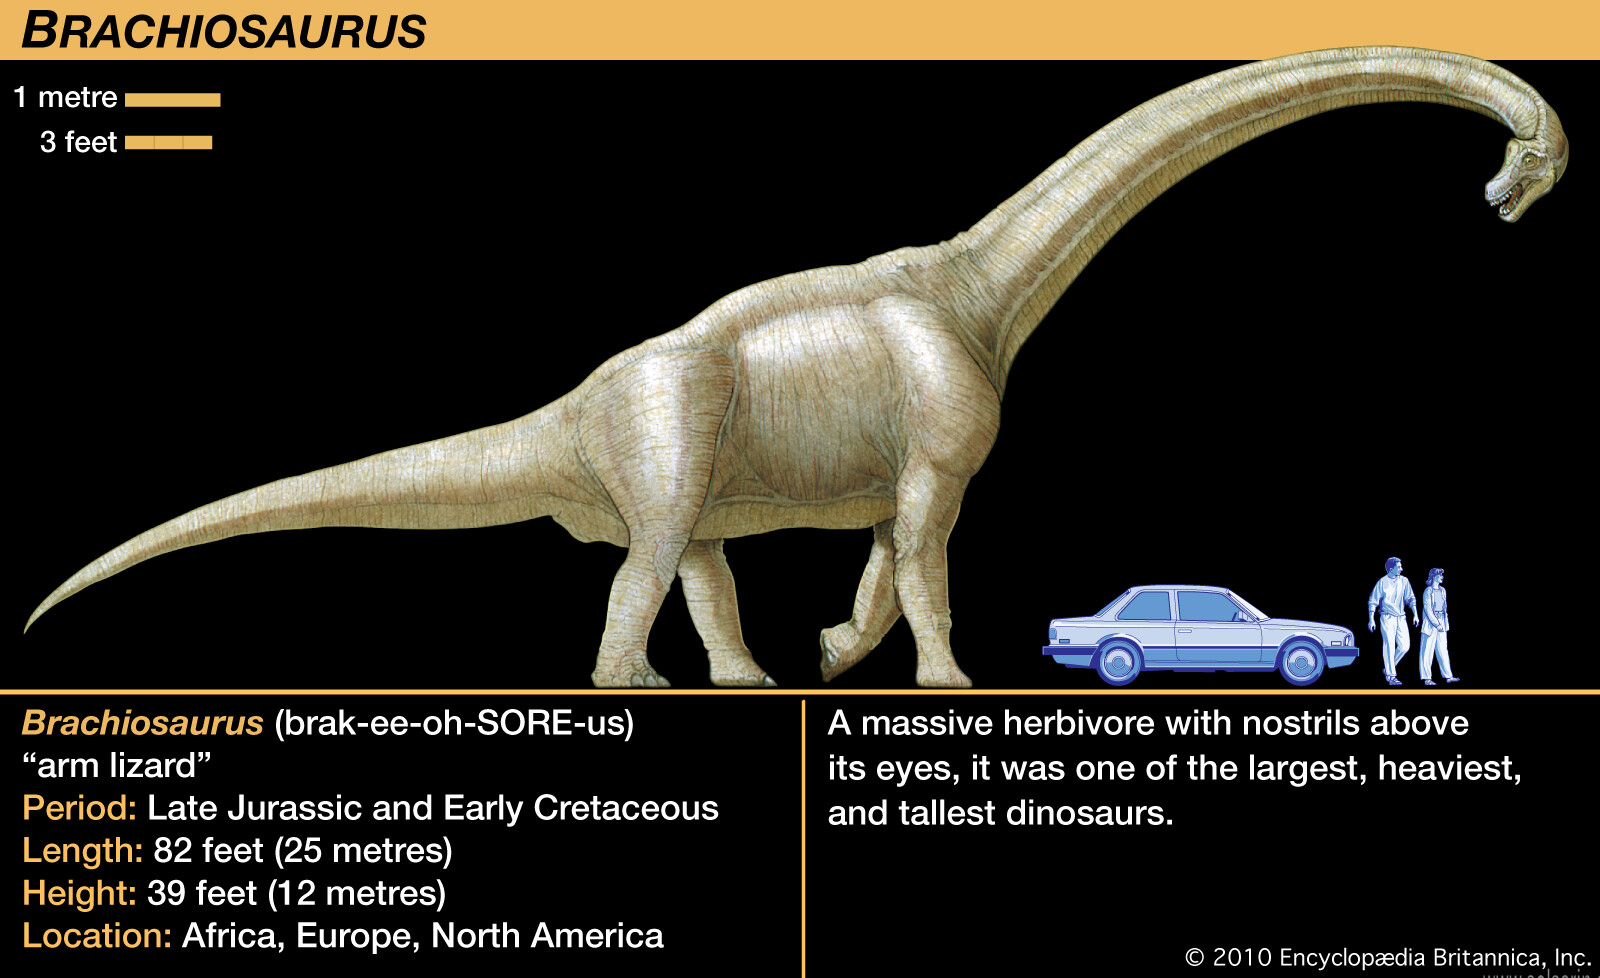 how tall is a brachiosaurus?